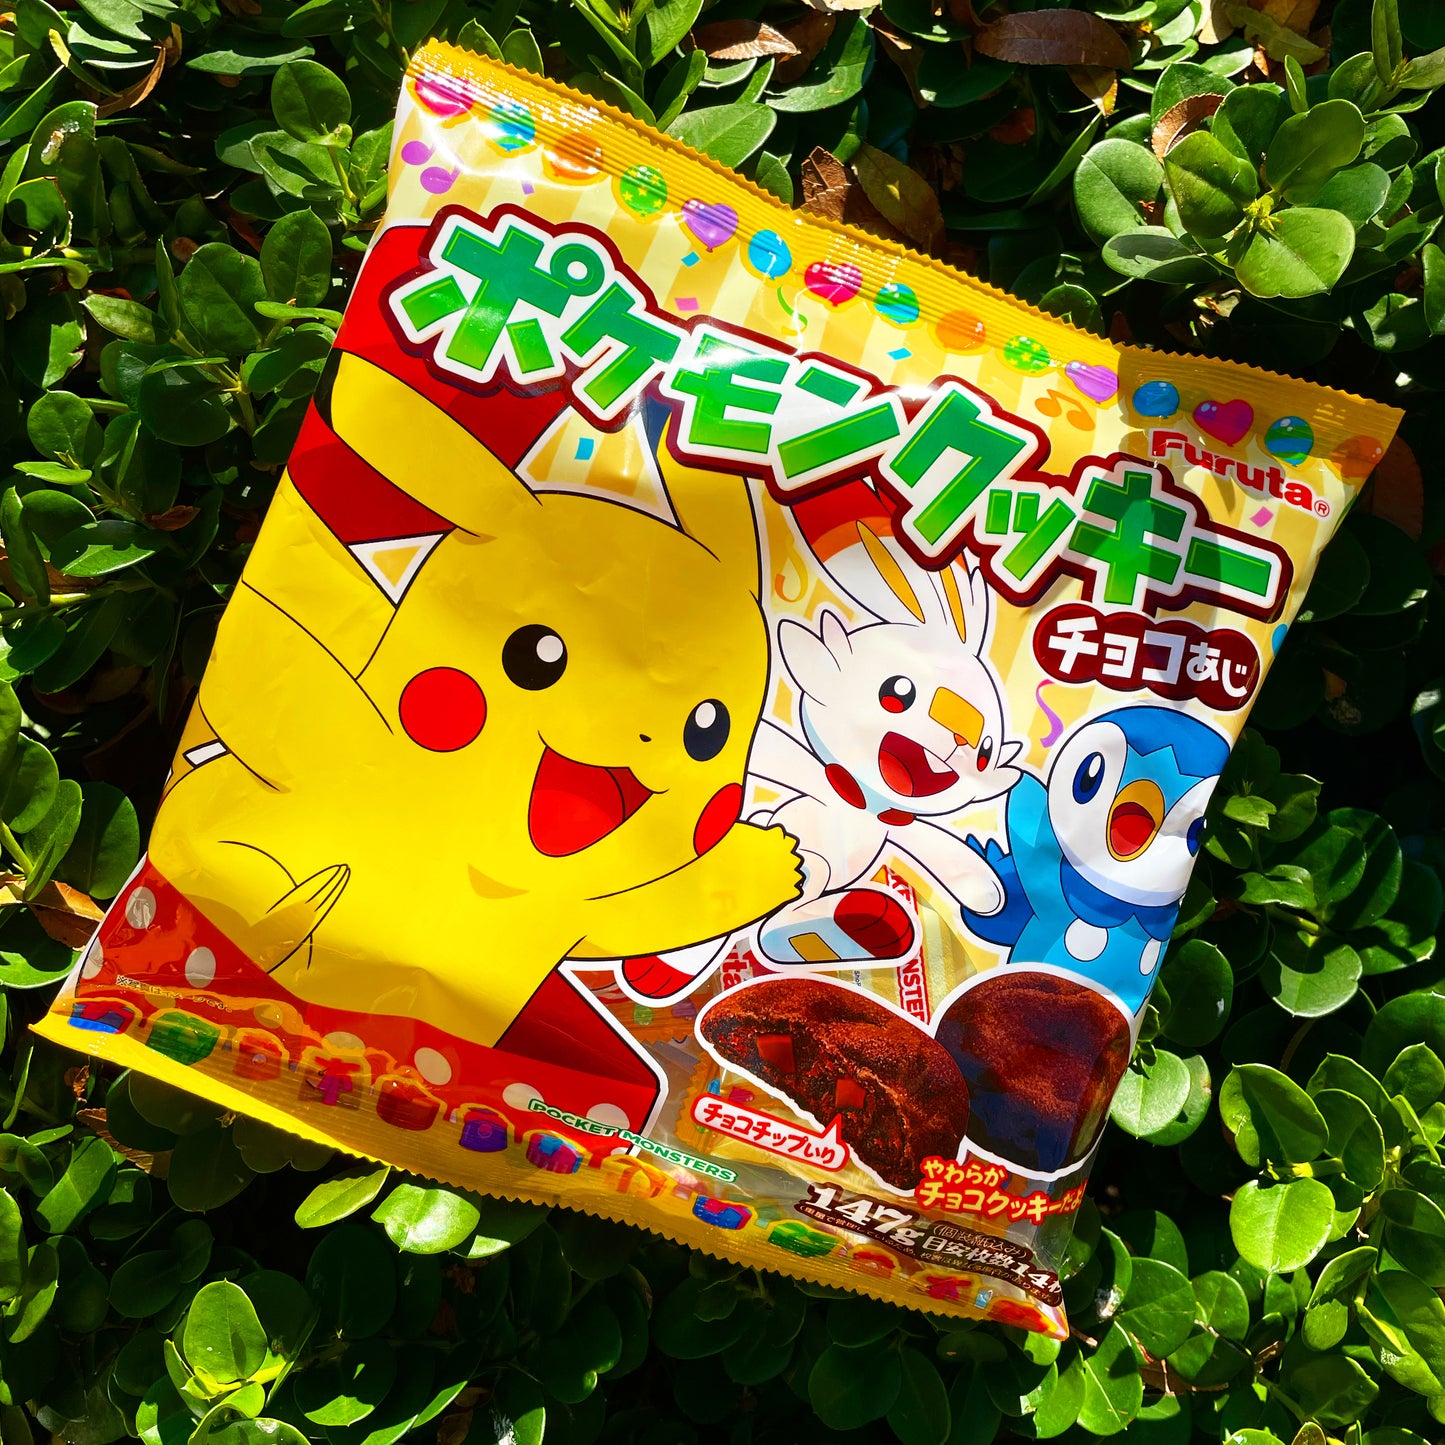 Furuta Pokemon Chocolate Cookie Pack (Japan)